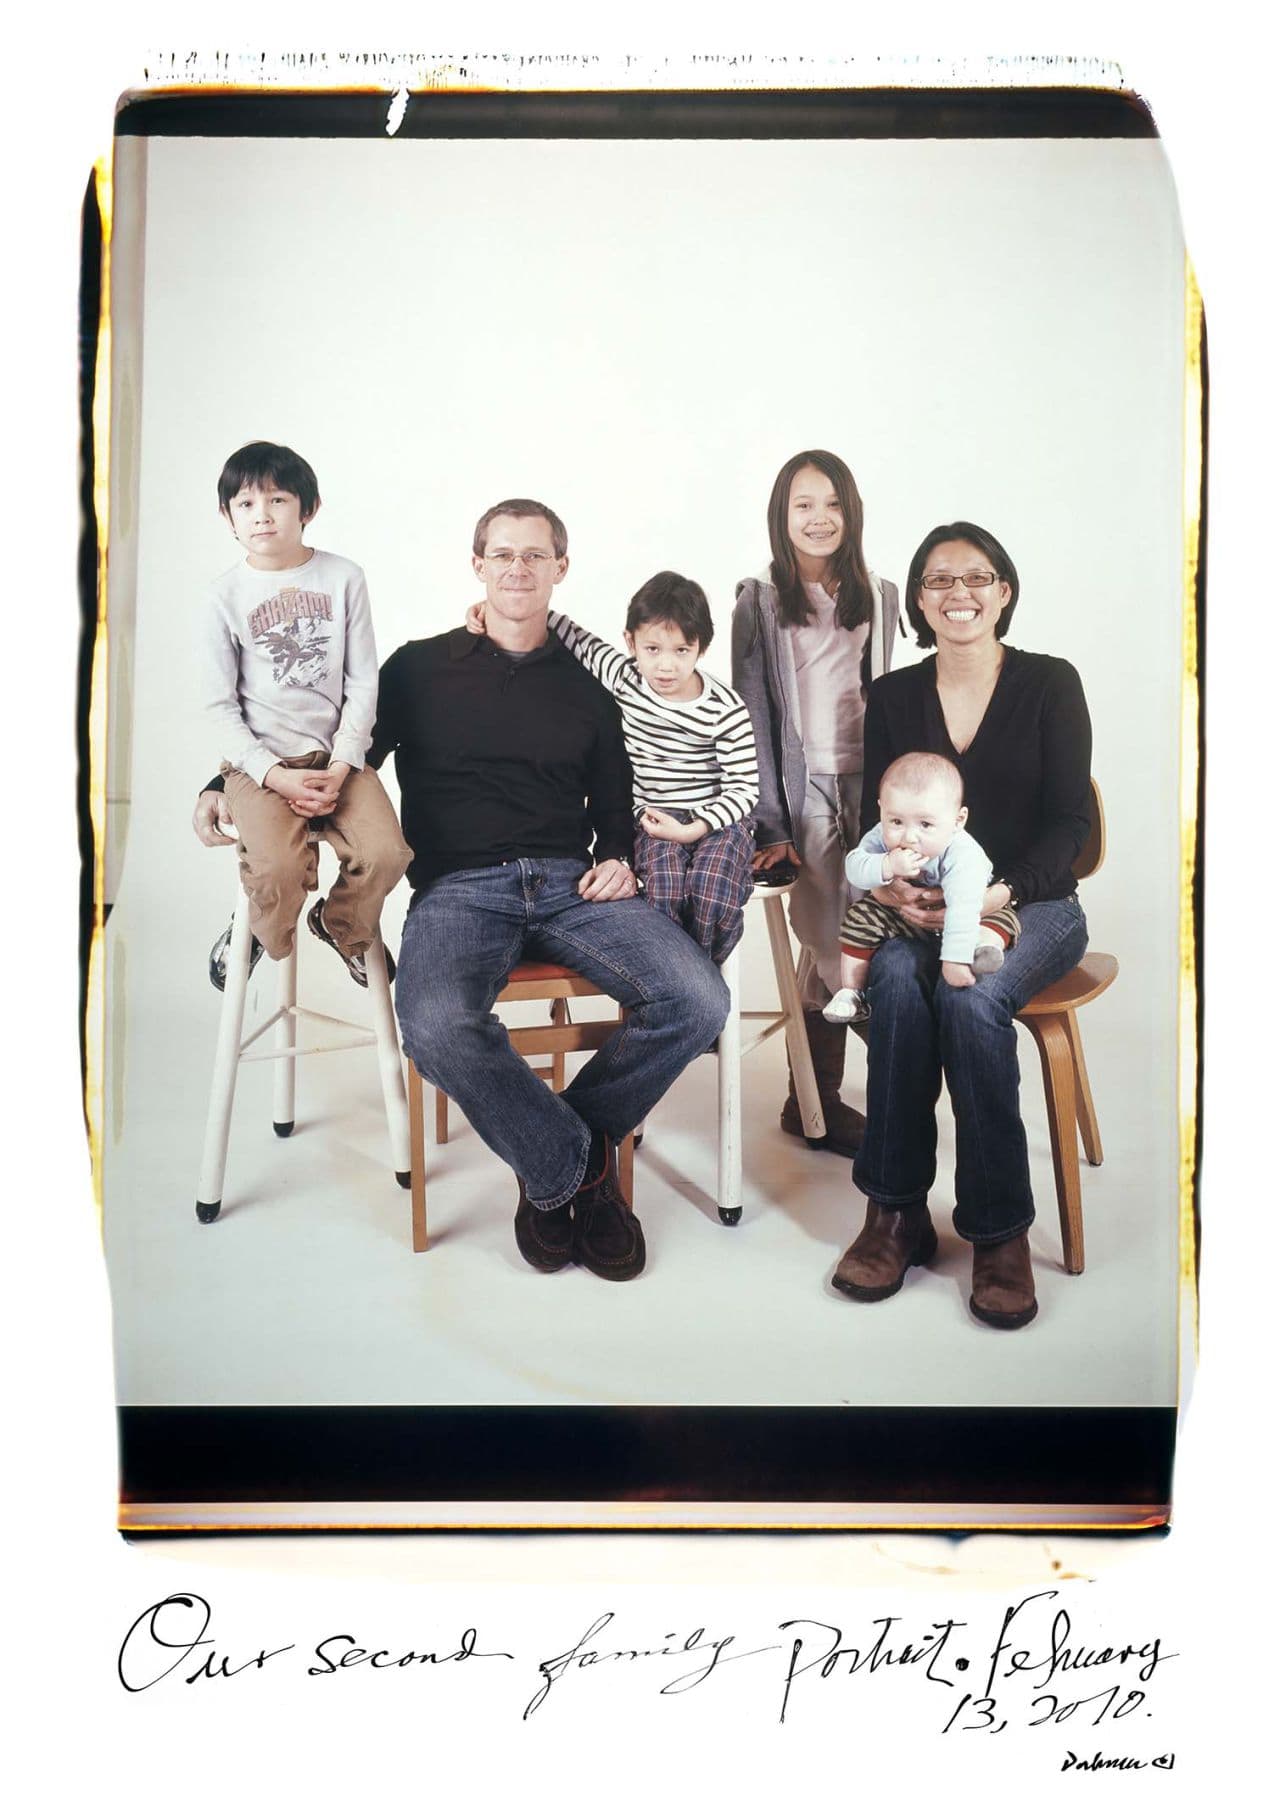 Our Second Family Portrait - 2010